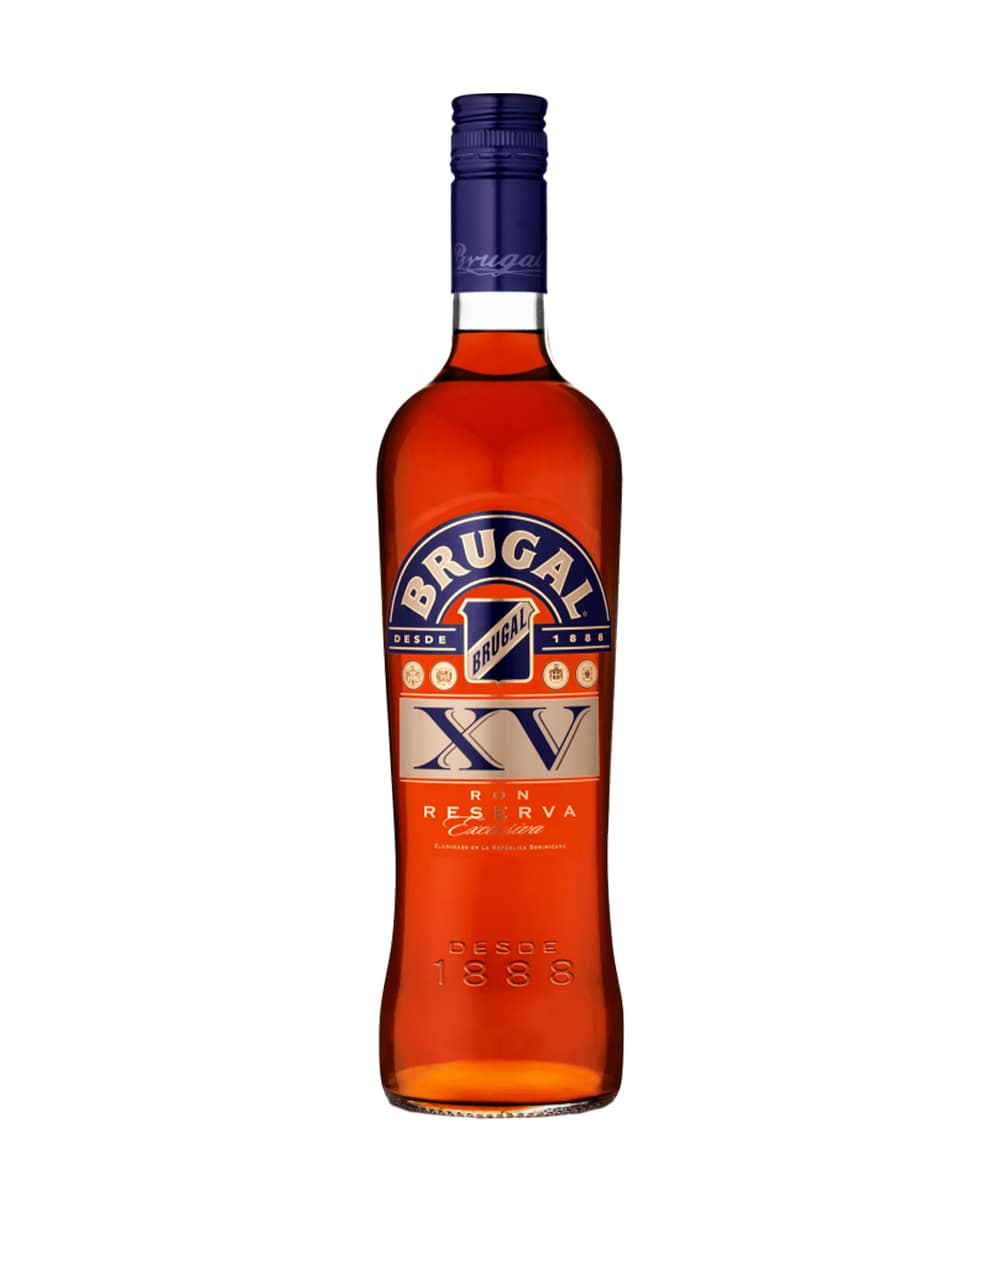 Brugal XV Rum